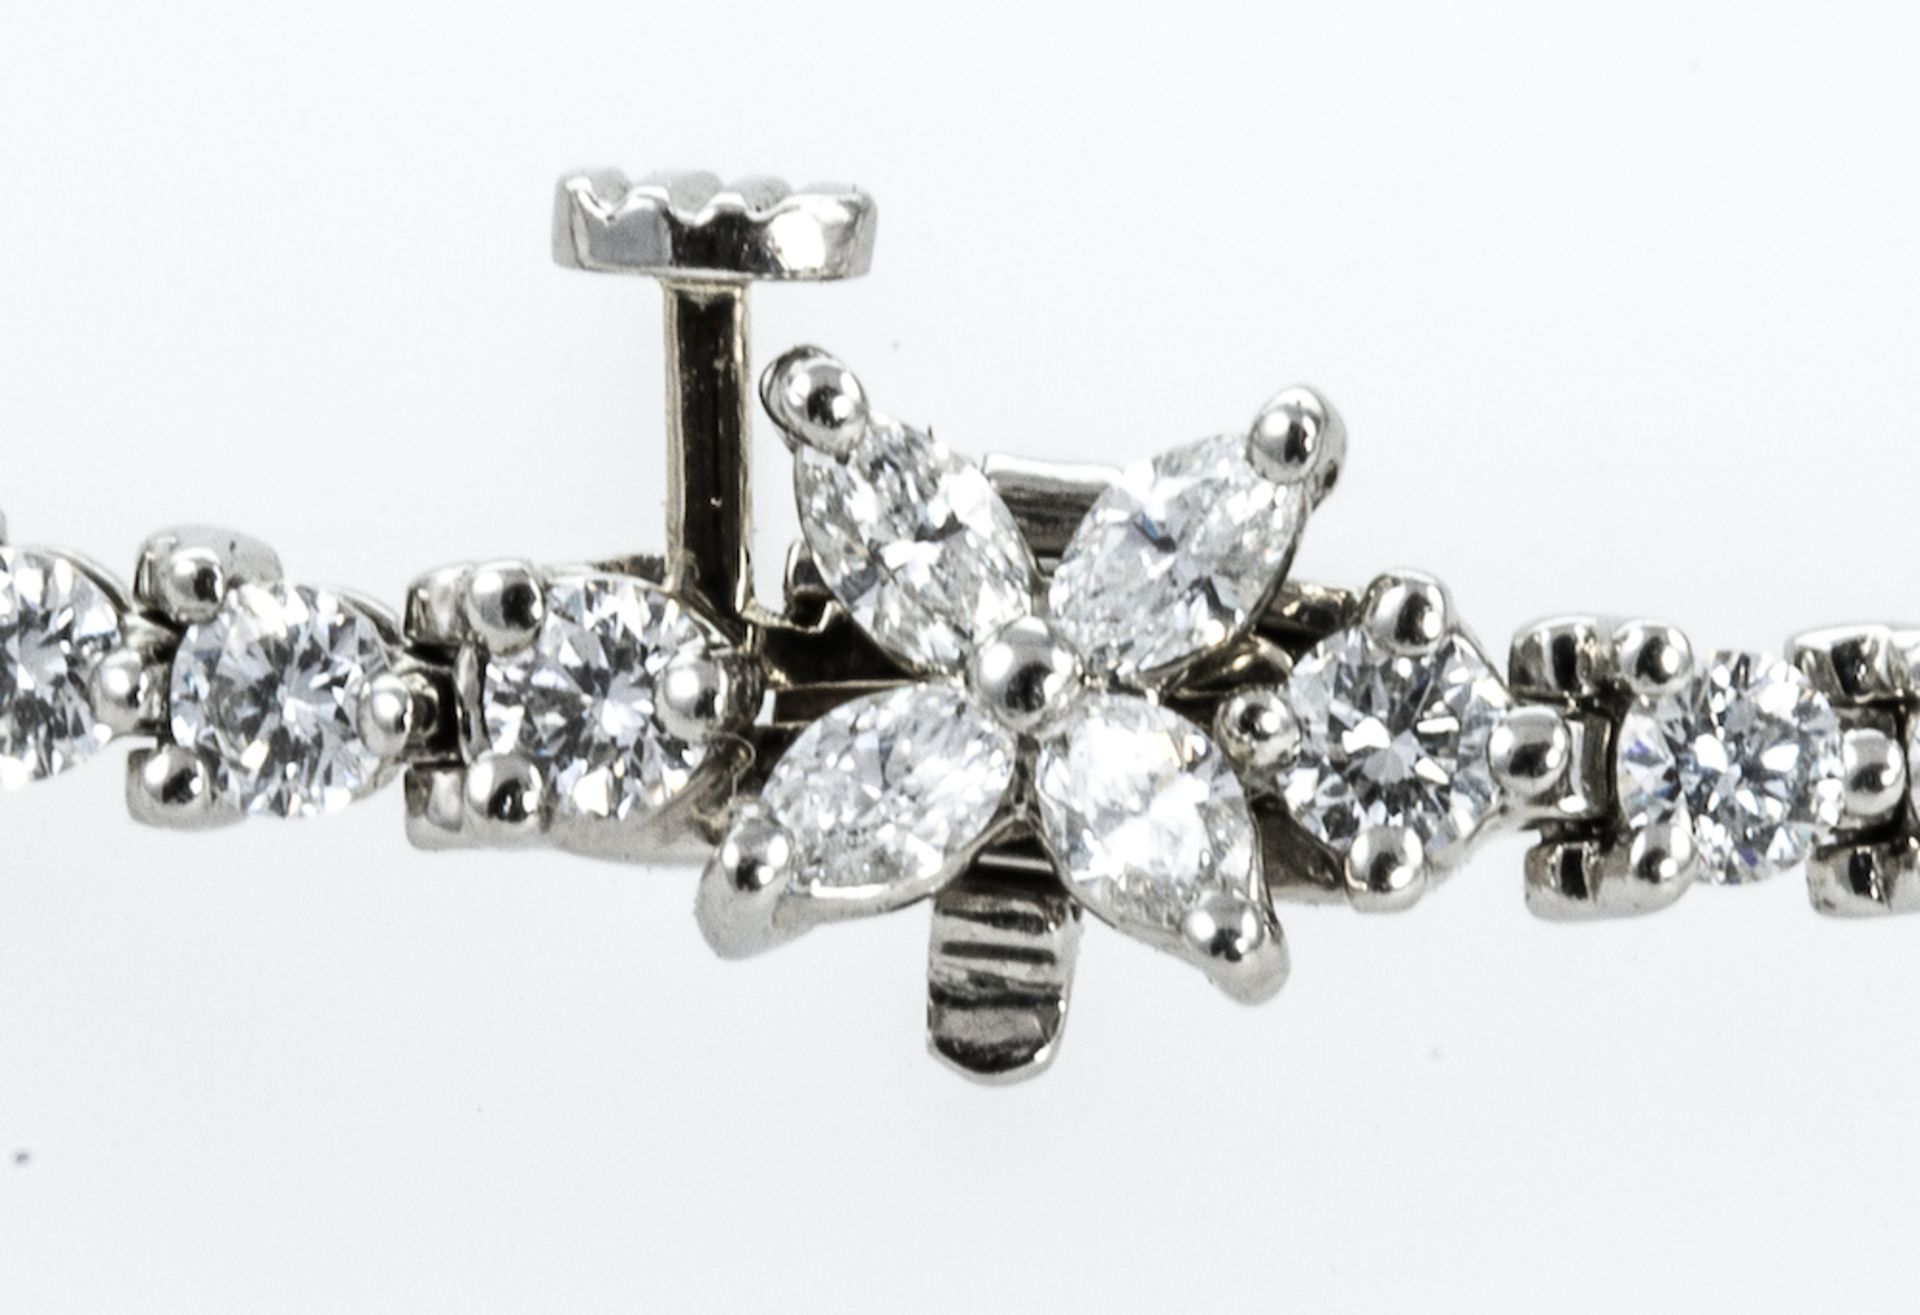 TIFFANY AND CO - a platinum Victoria diamond bracelet, designed as a series of brilliant cut